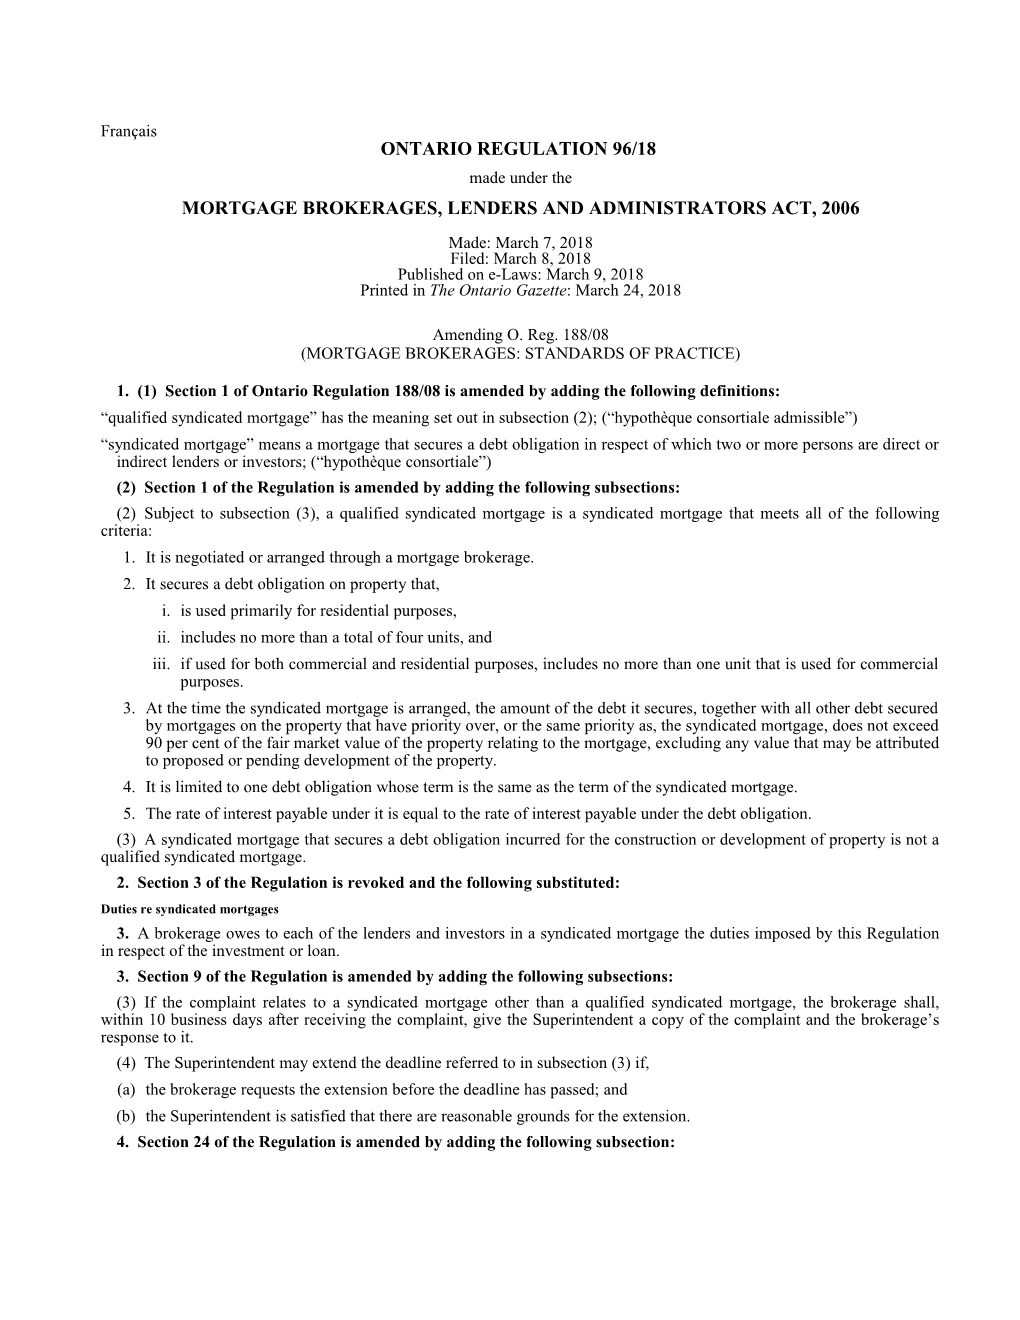 MORTGAGE BROKERAGES, LENDERS and ADMINISTRATORS ACT, 2006 - O. Reg. 96/18